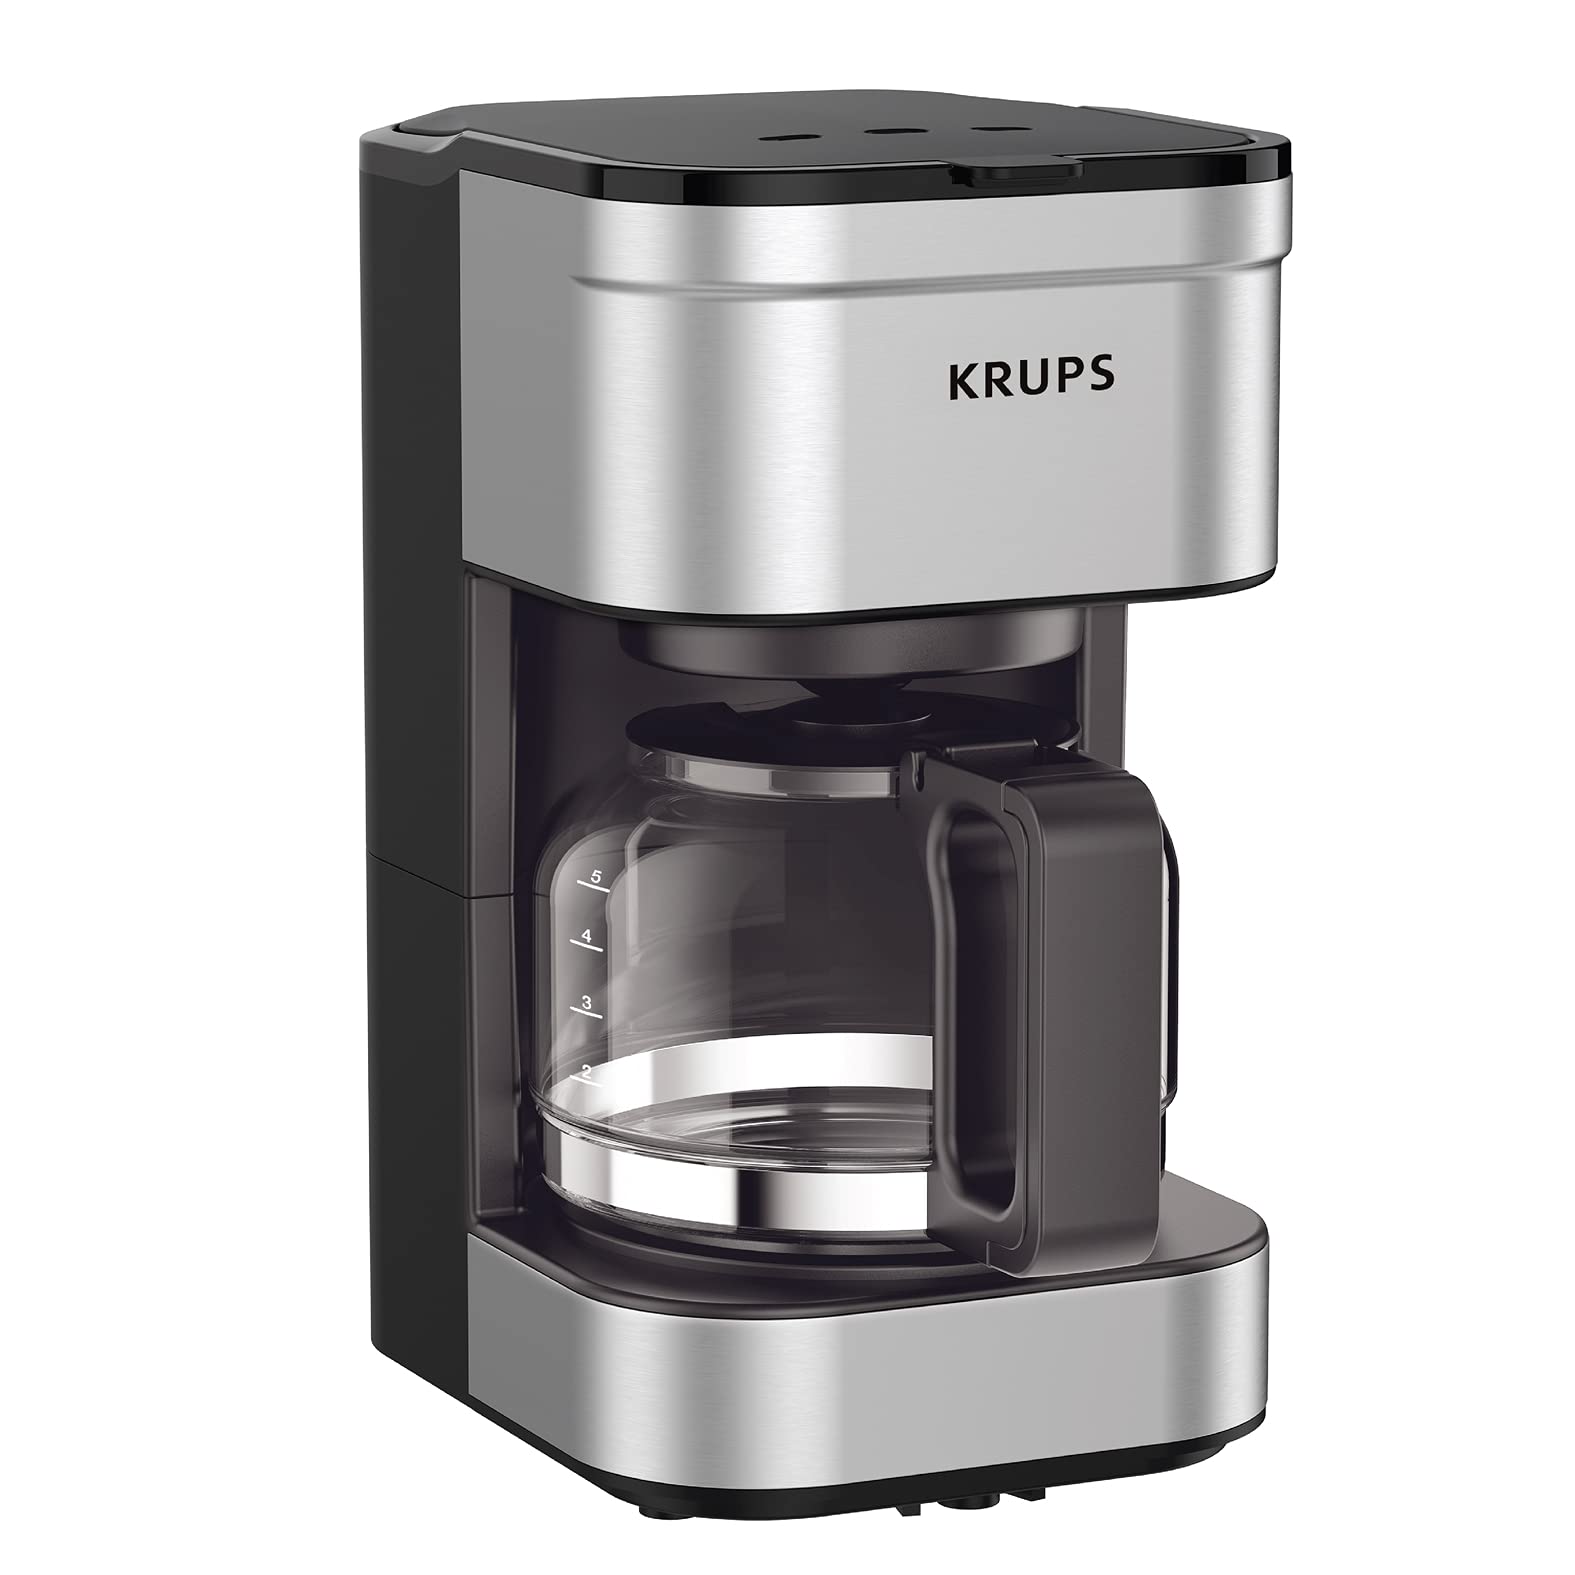 Krups Simply Brew Drip Coffee Maker